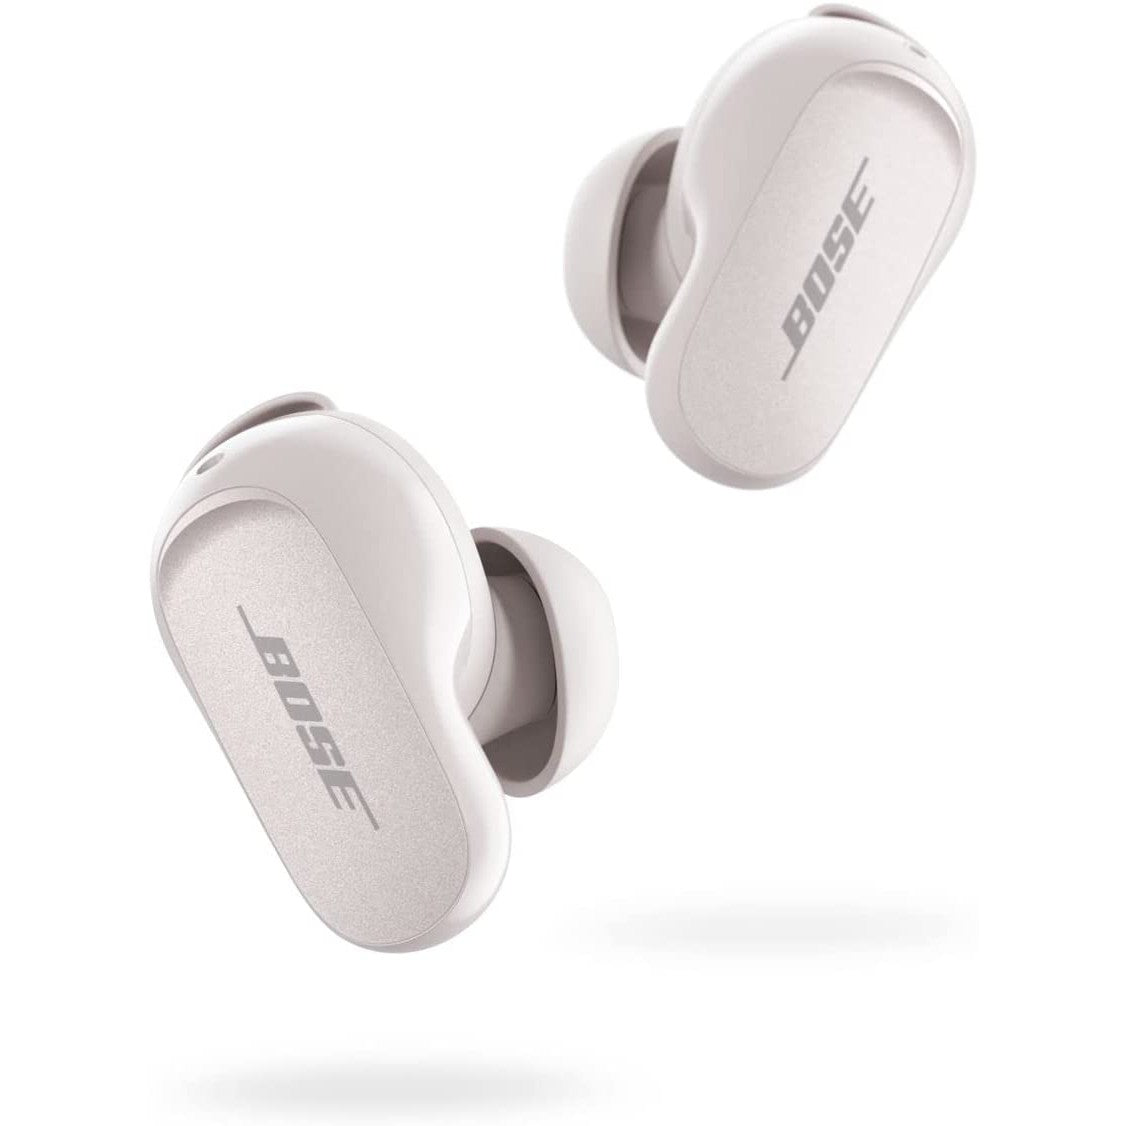 Bose QuietComfort II Wireless Bluetooth Earbuds - White - Pristine